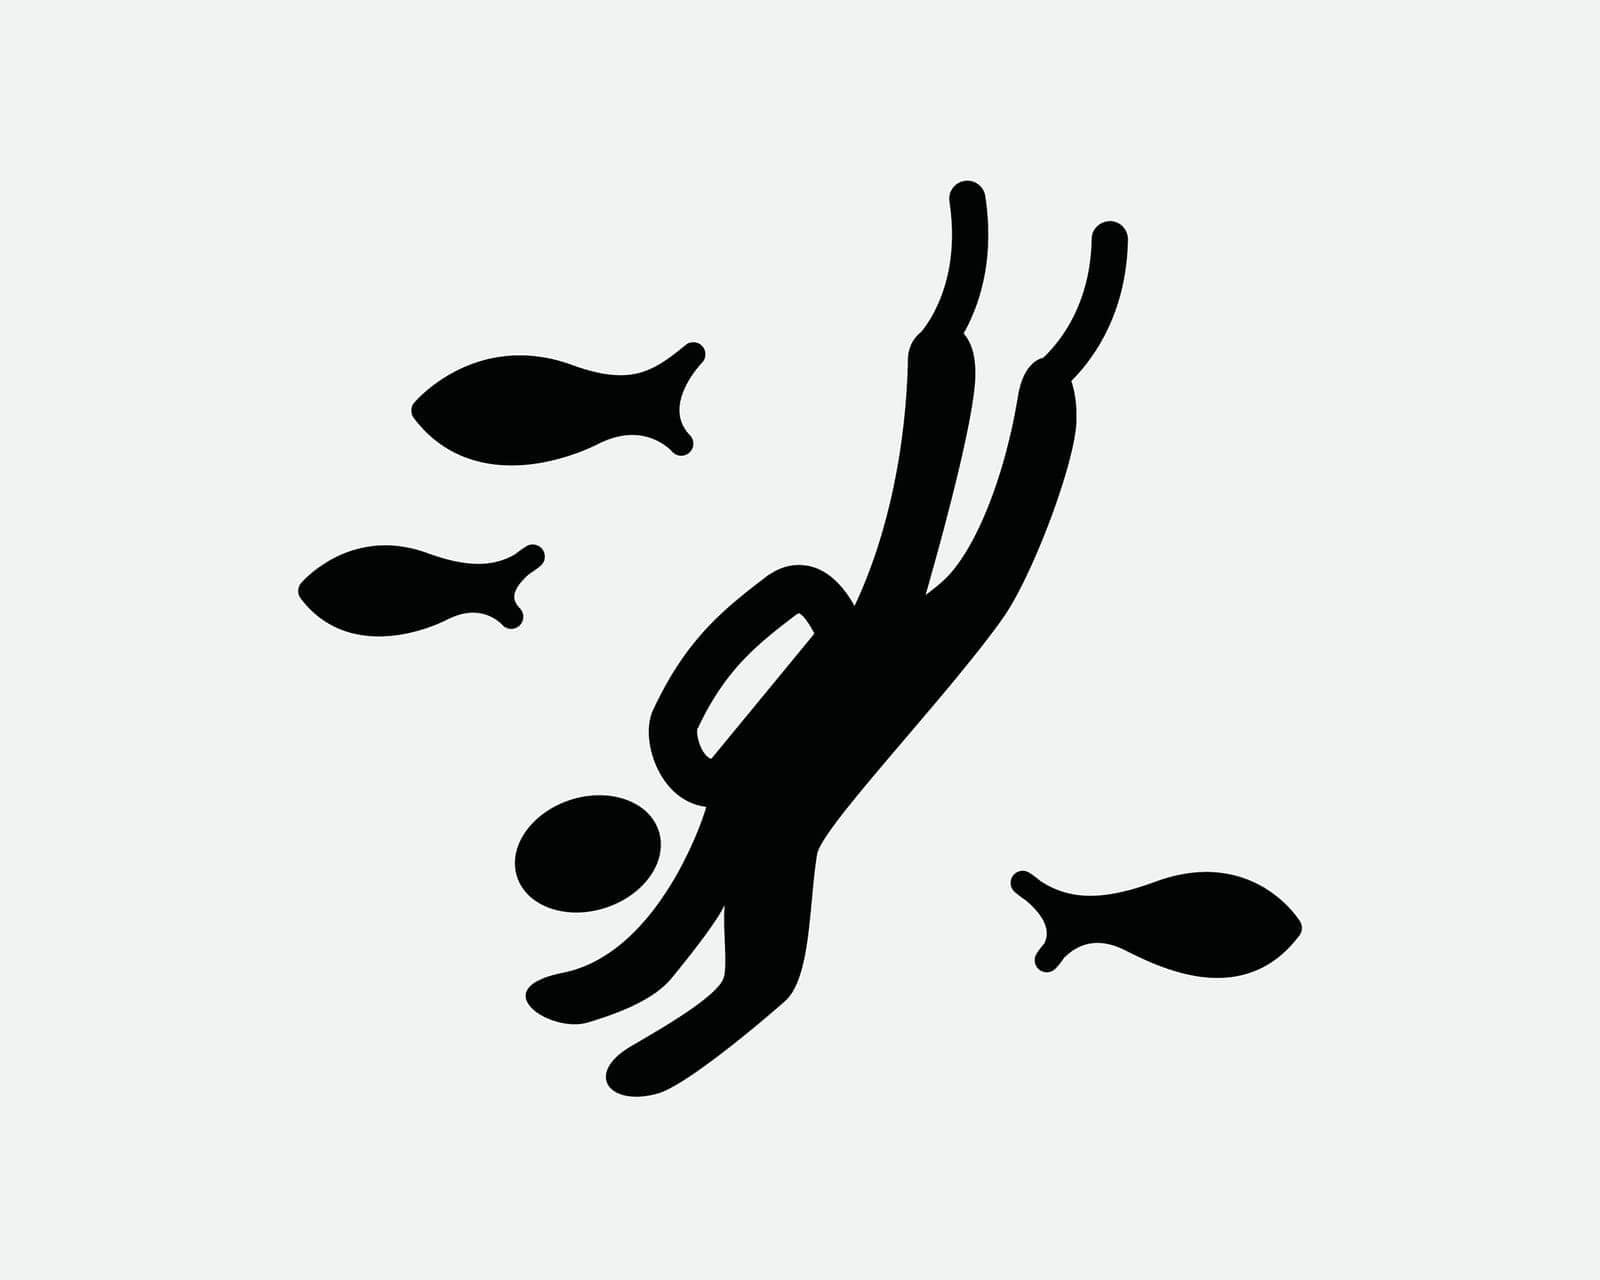 Underwater Dive Icon. Man SCUBA Diving Diver Underwater Sea Ocean Fish Marine Black White Sign Symbol Illustration Artwork Graphic Clipart EPS Vector